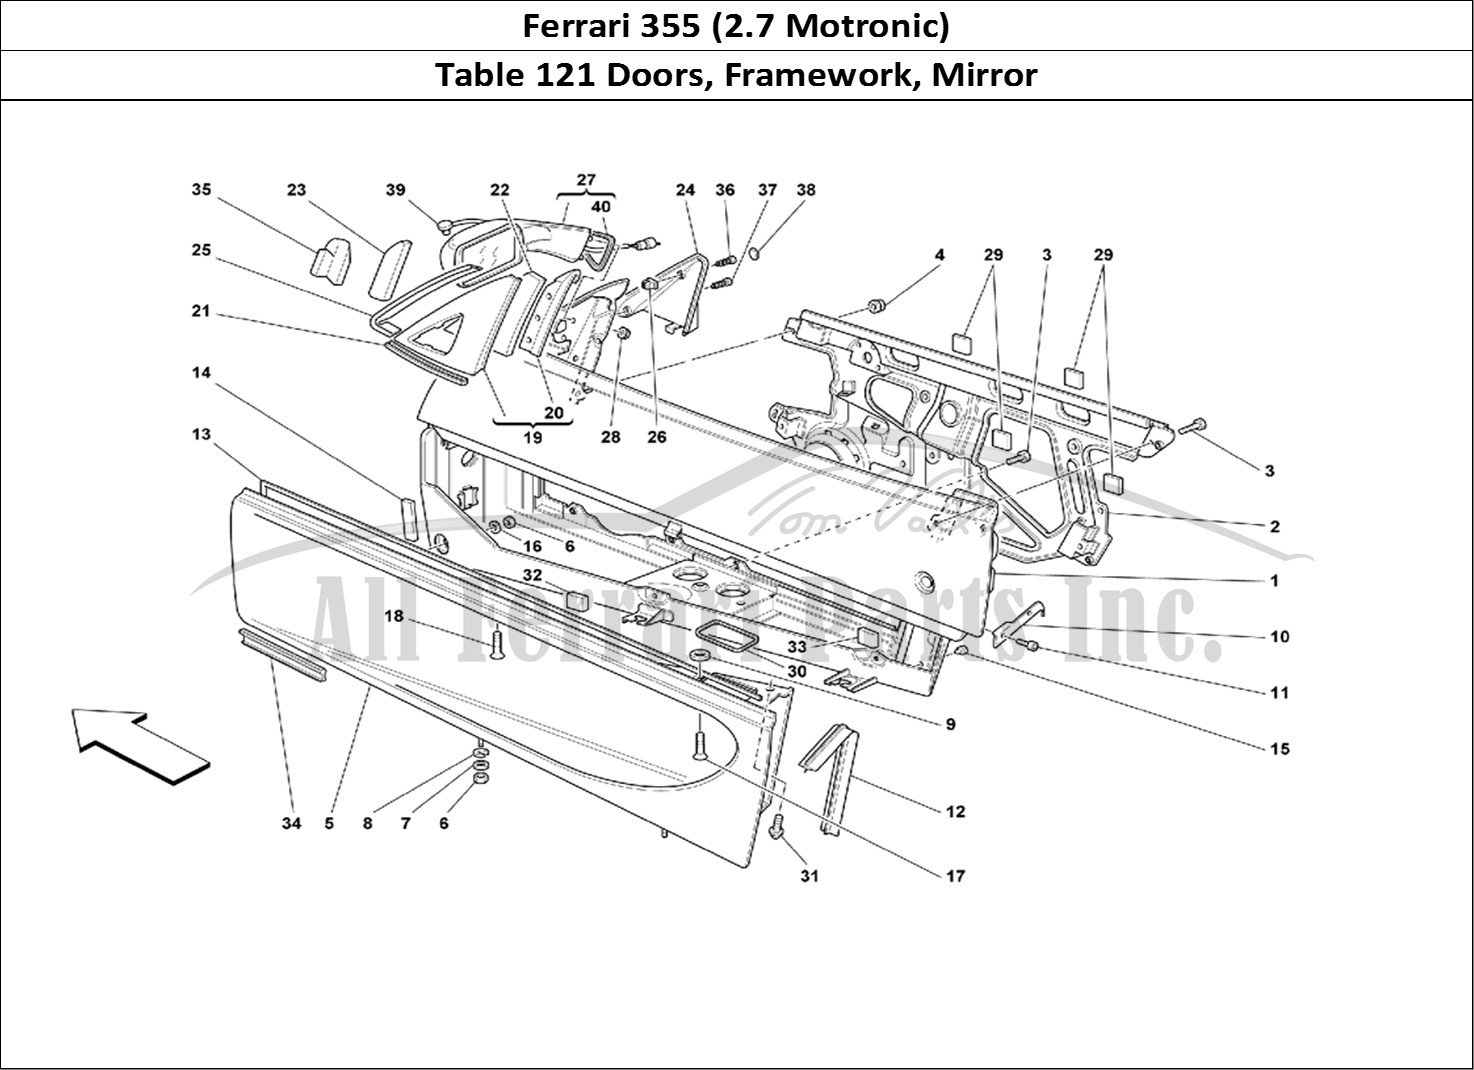 Ferrari Parts Ferrari 355 (2.7 Motronic) Page 121 Doors - Framework and Rea